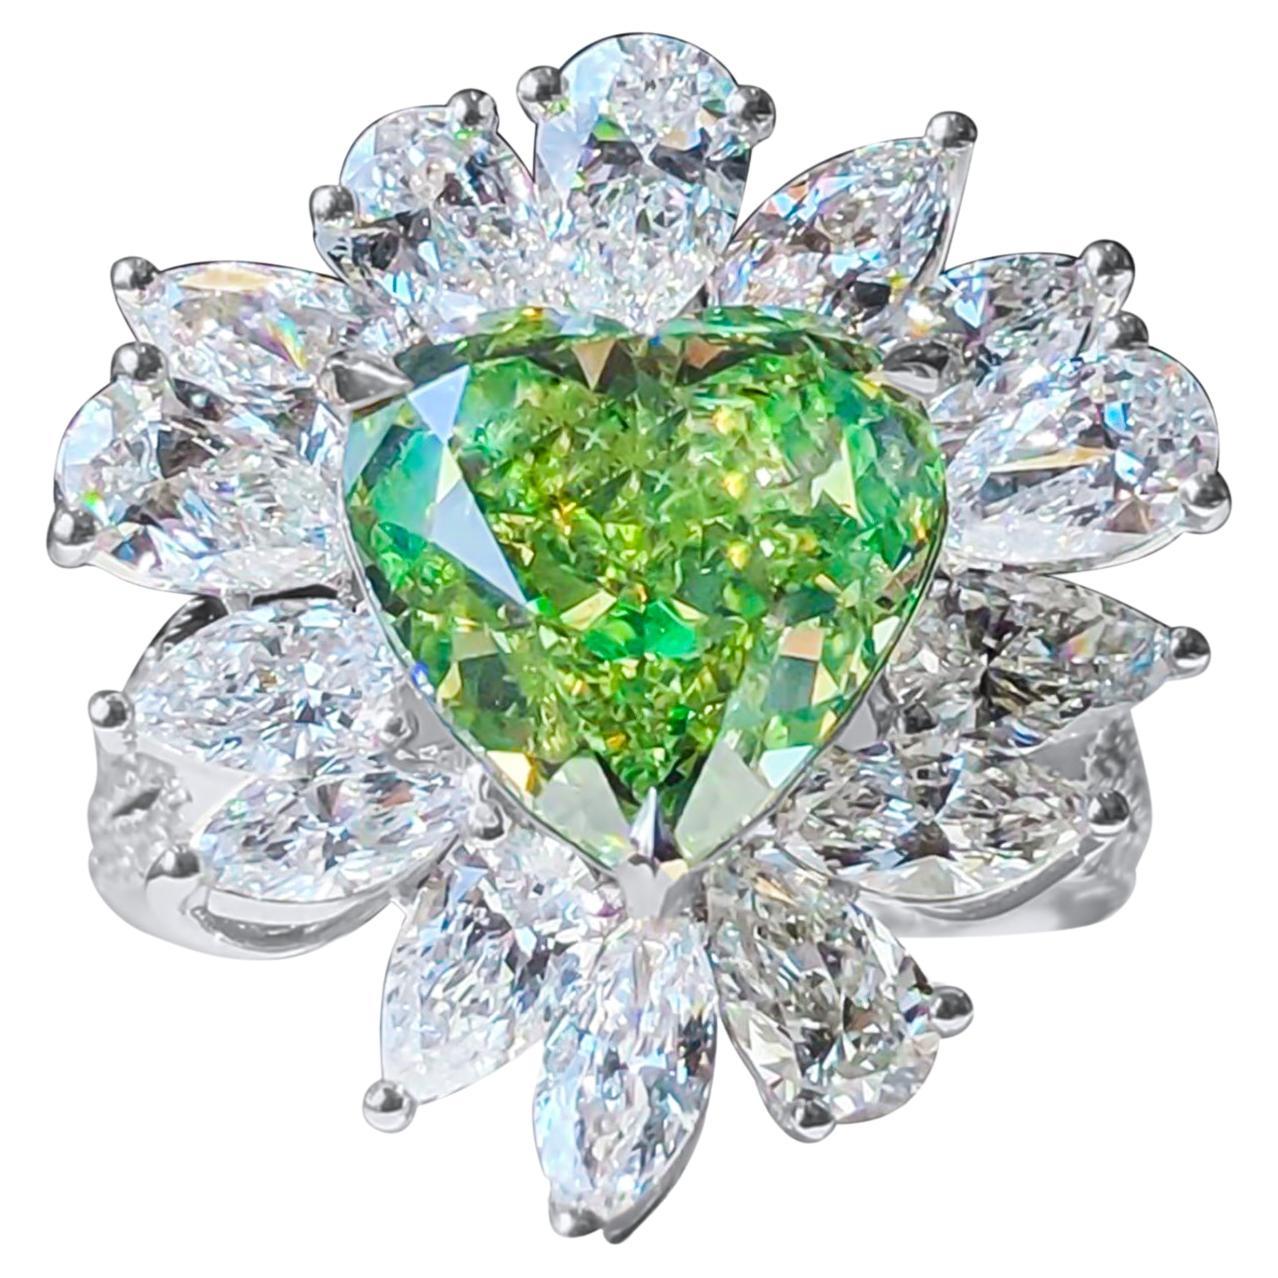 5.07 Carat Fancy Green Heart Cut Diamond Ring GIA Certified For Sale